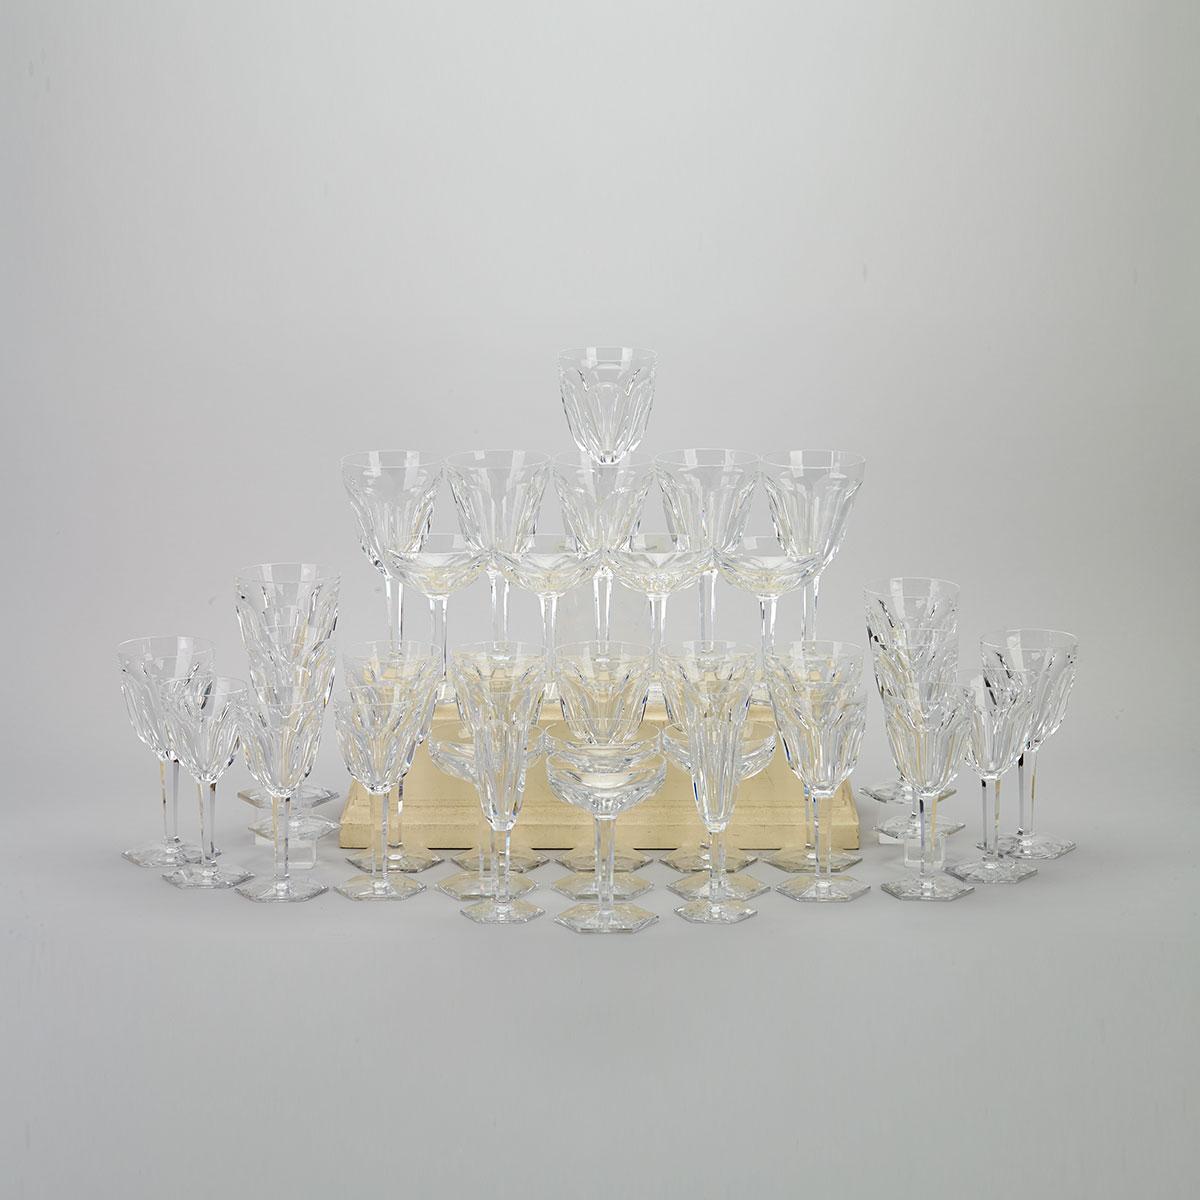 Suite of Baccarat ‘Compiègne’ Pattern Cut Glass Stemware, 20th century